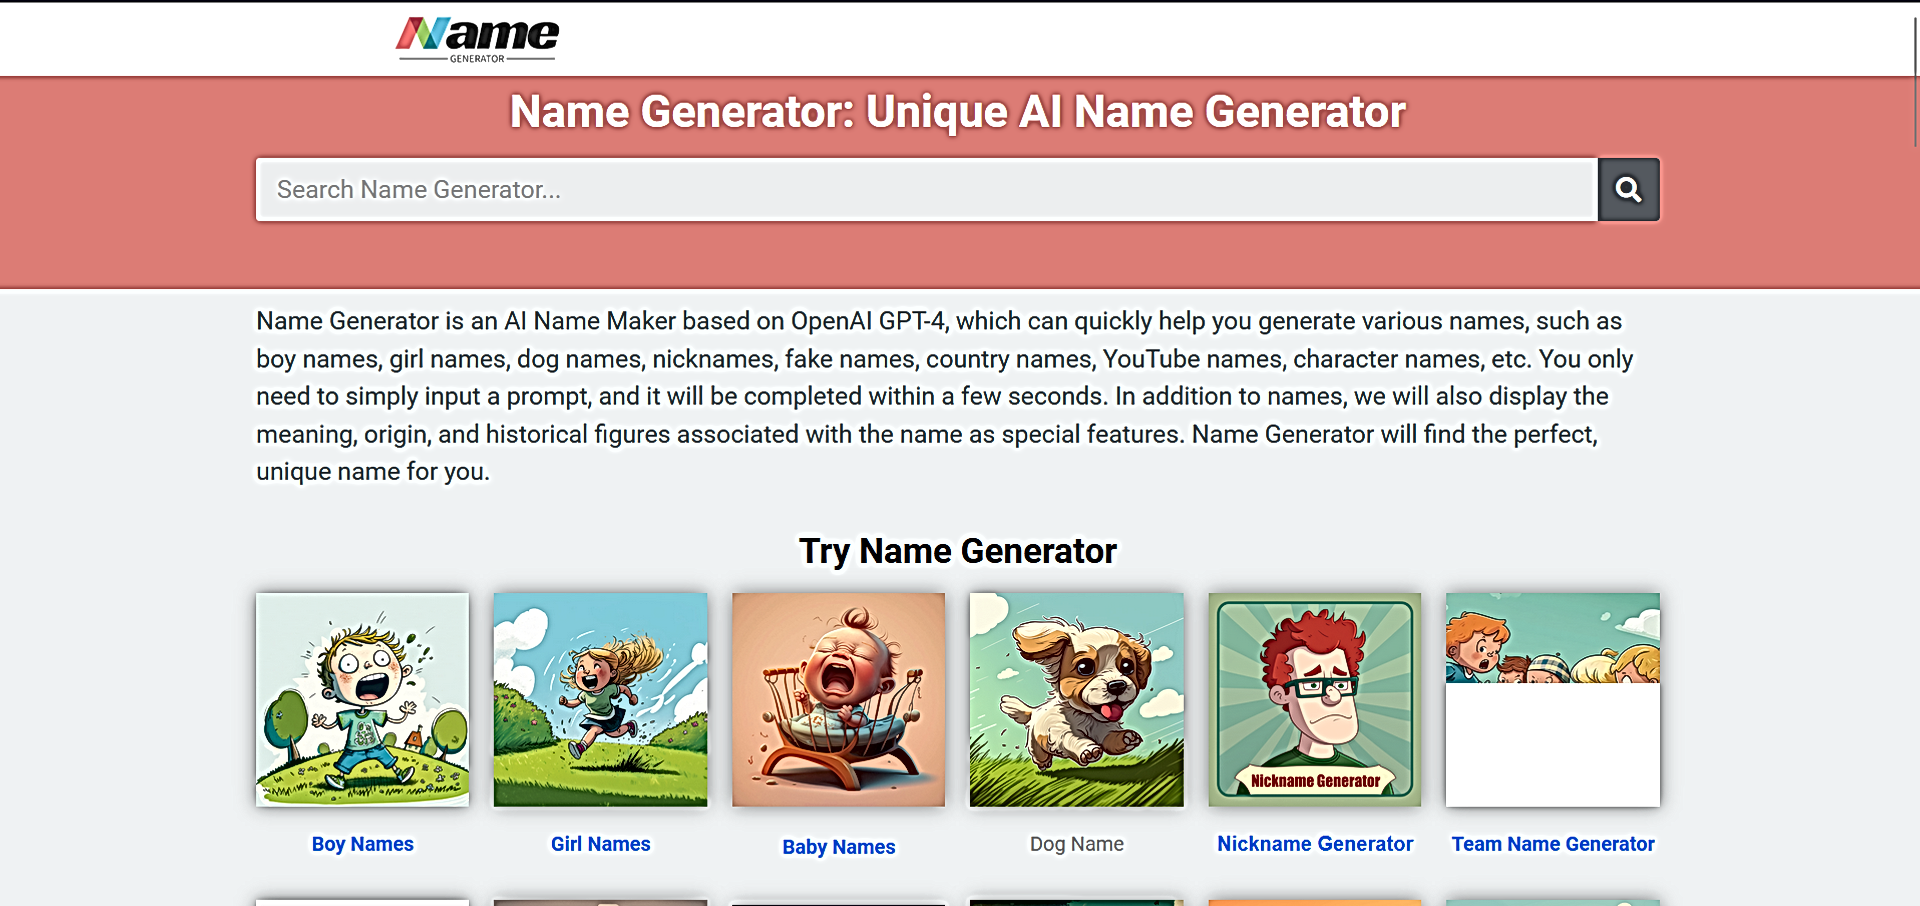 Name Generator featured